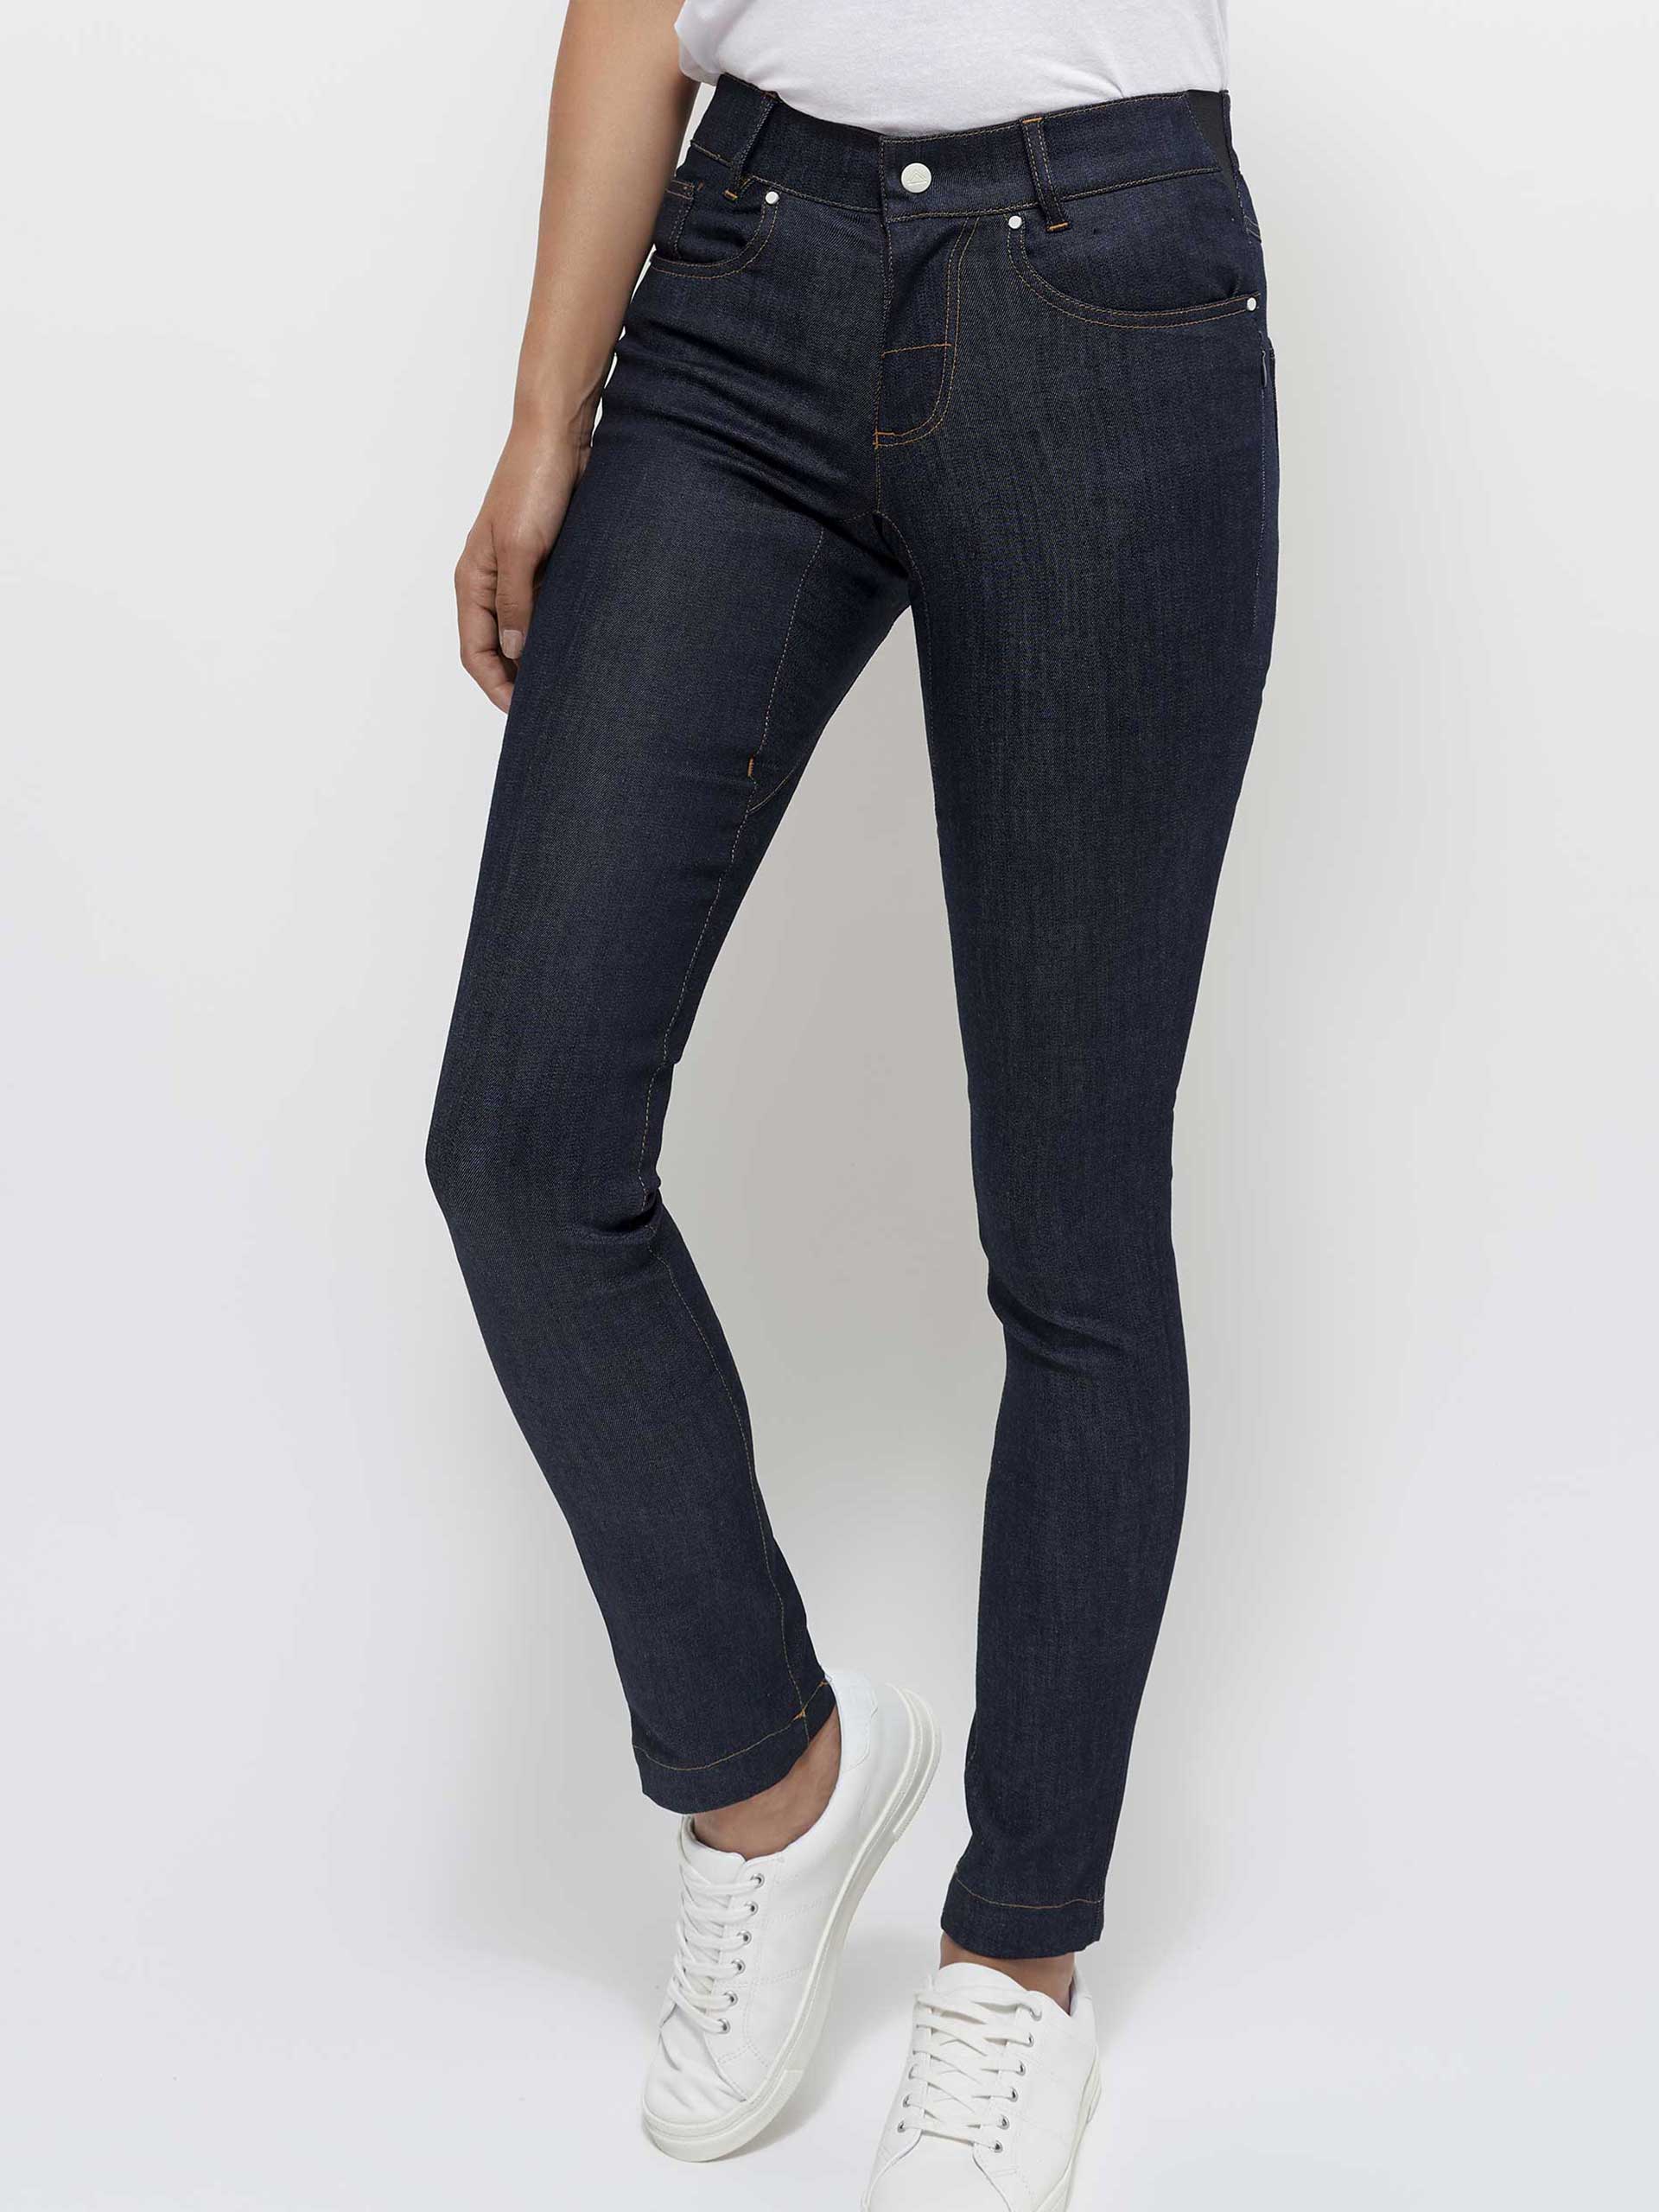 Looking For Wild Pantalon Denim - Jeans - Women's